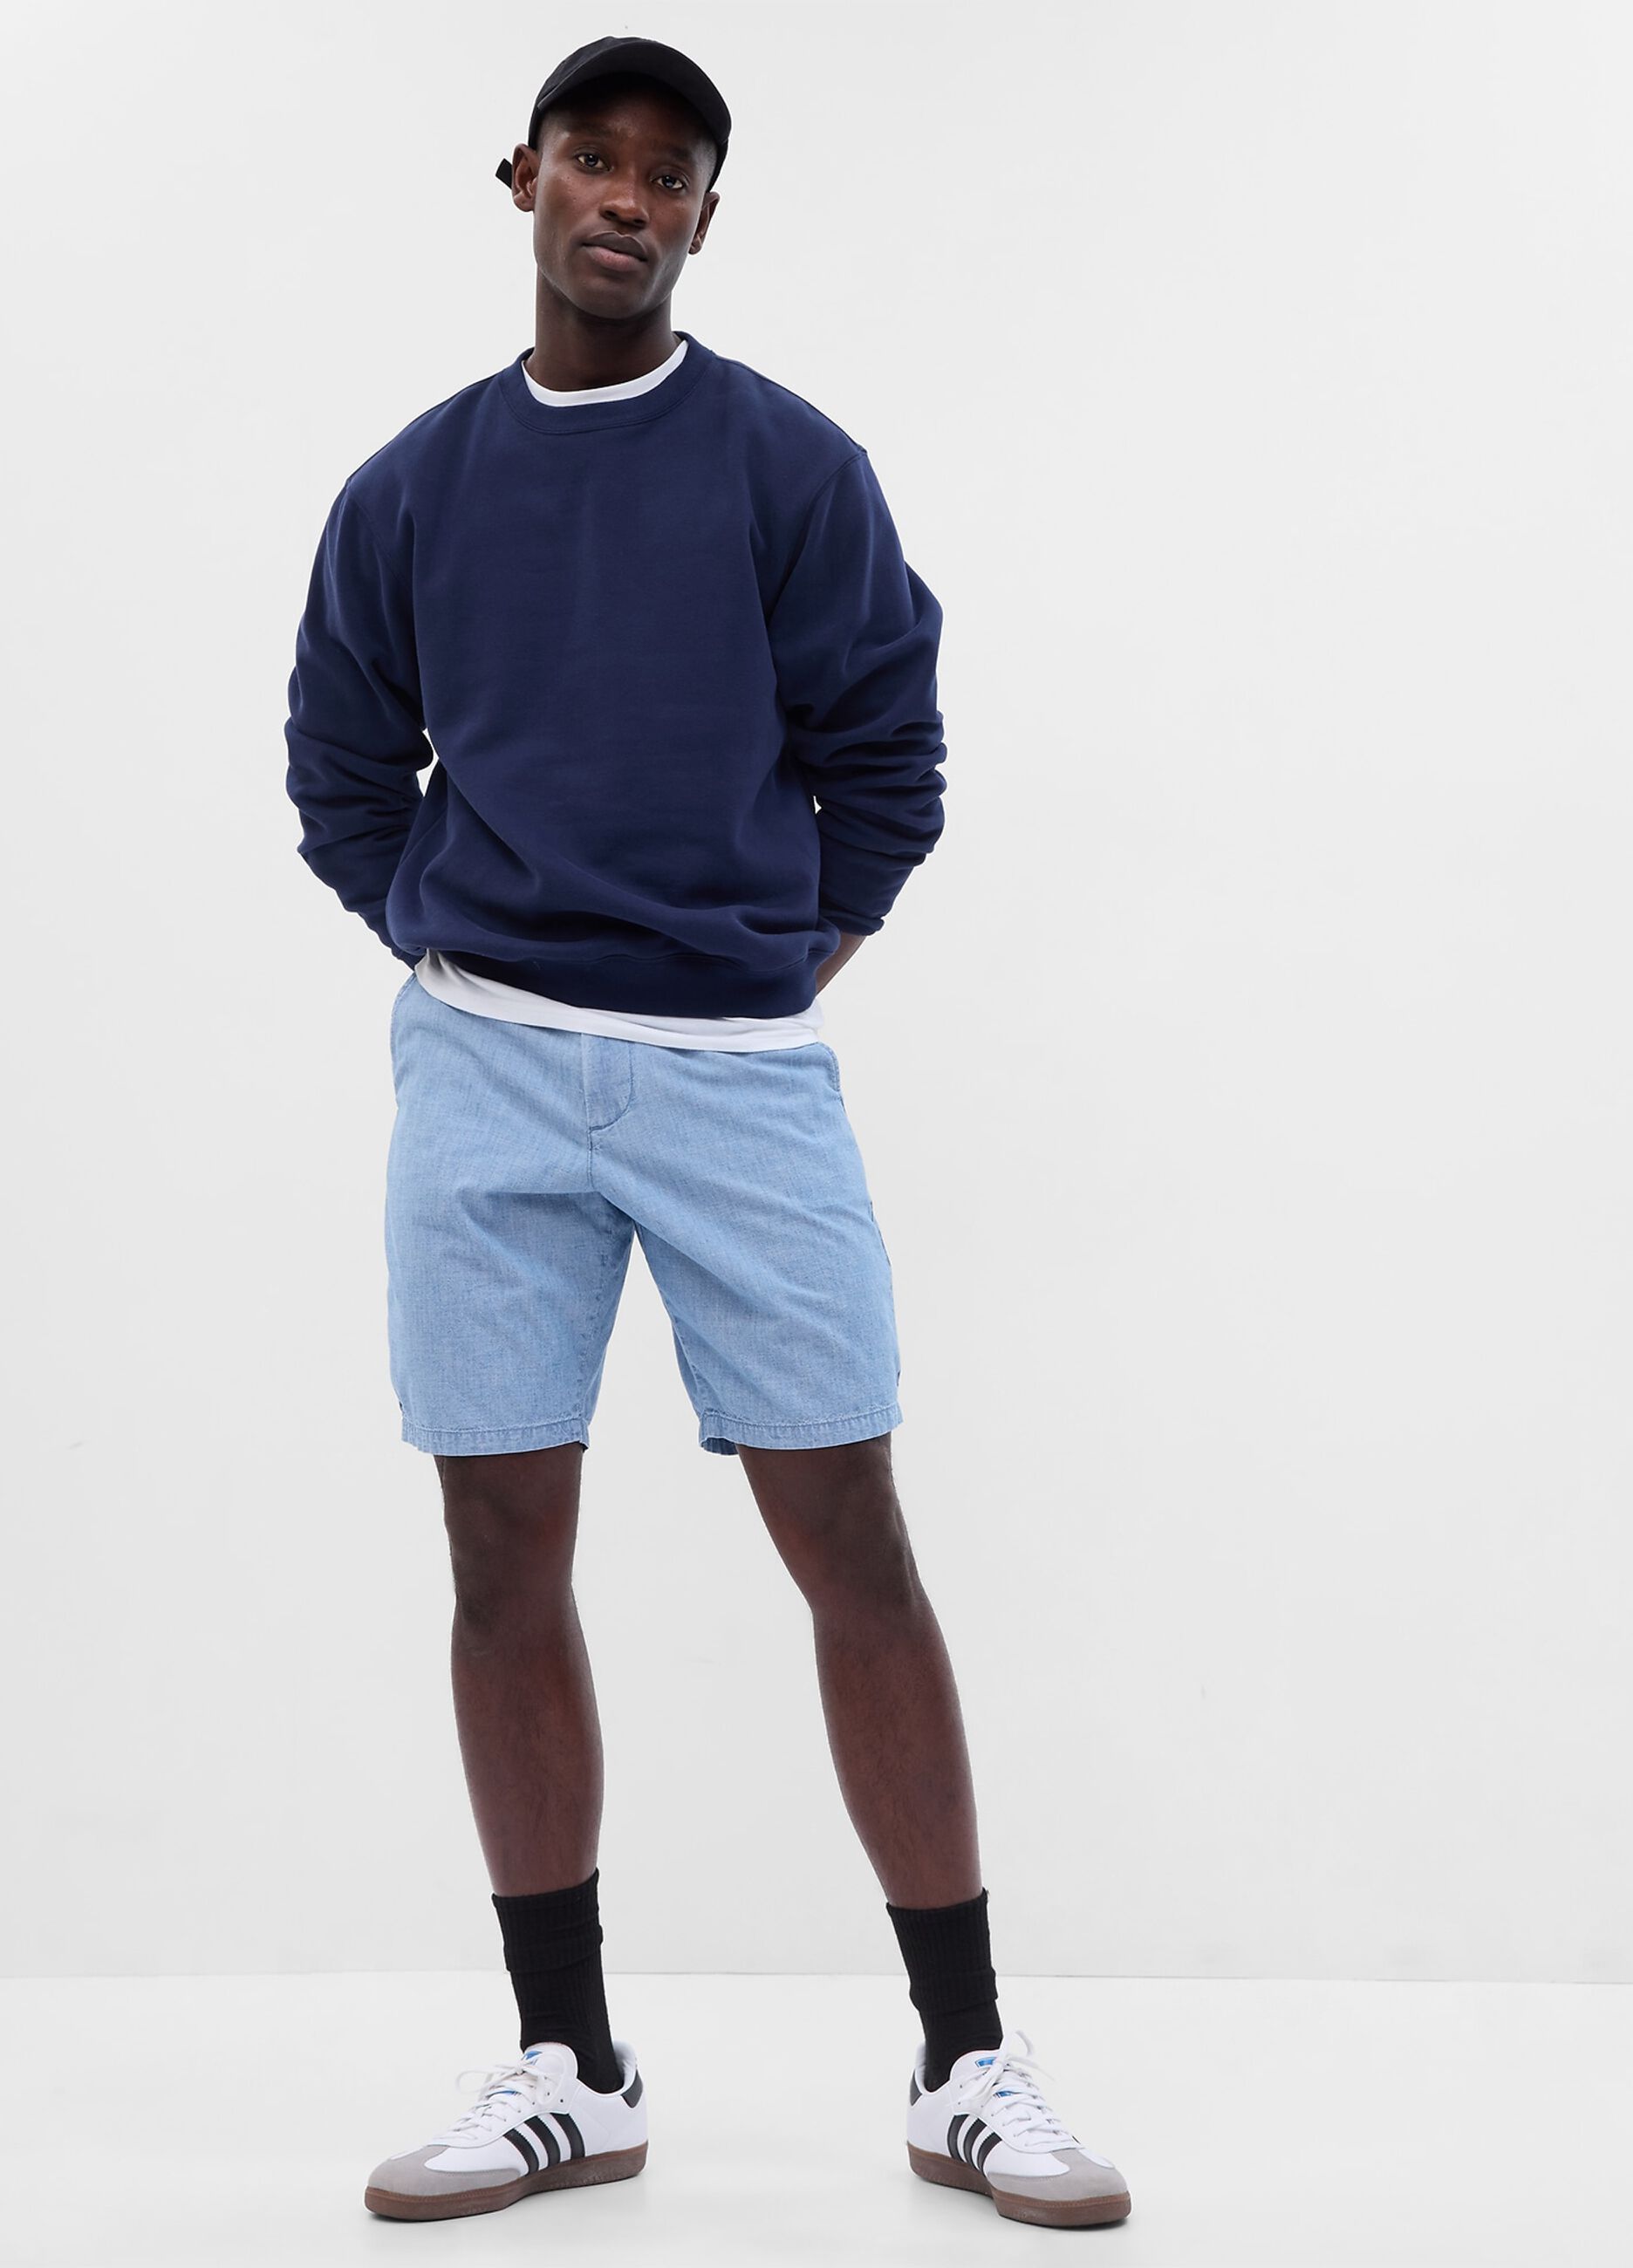 Chino Bermuda shorts in chambray cotton